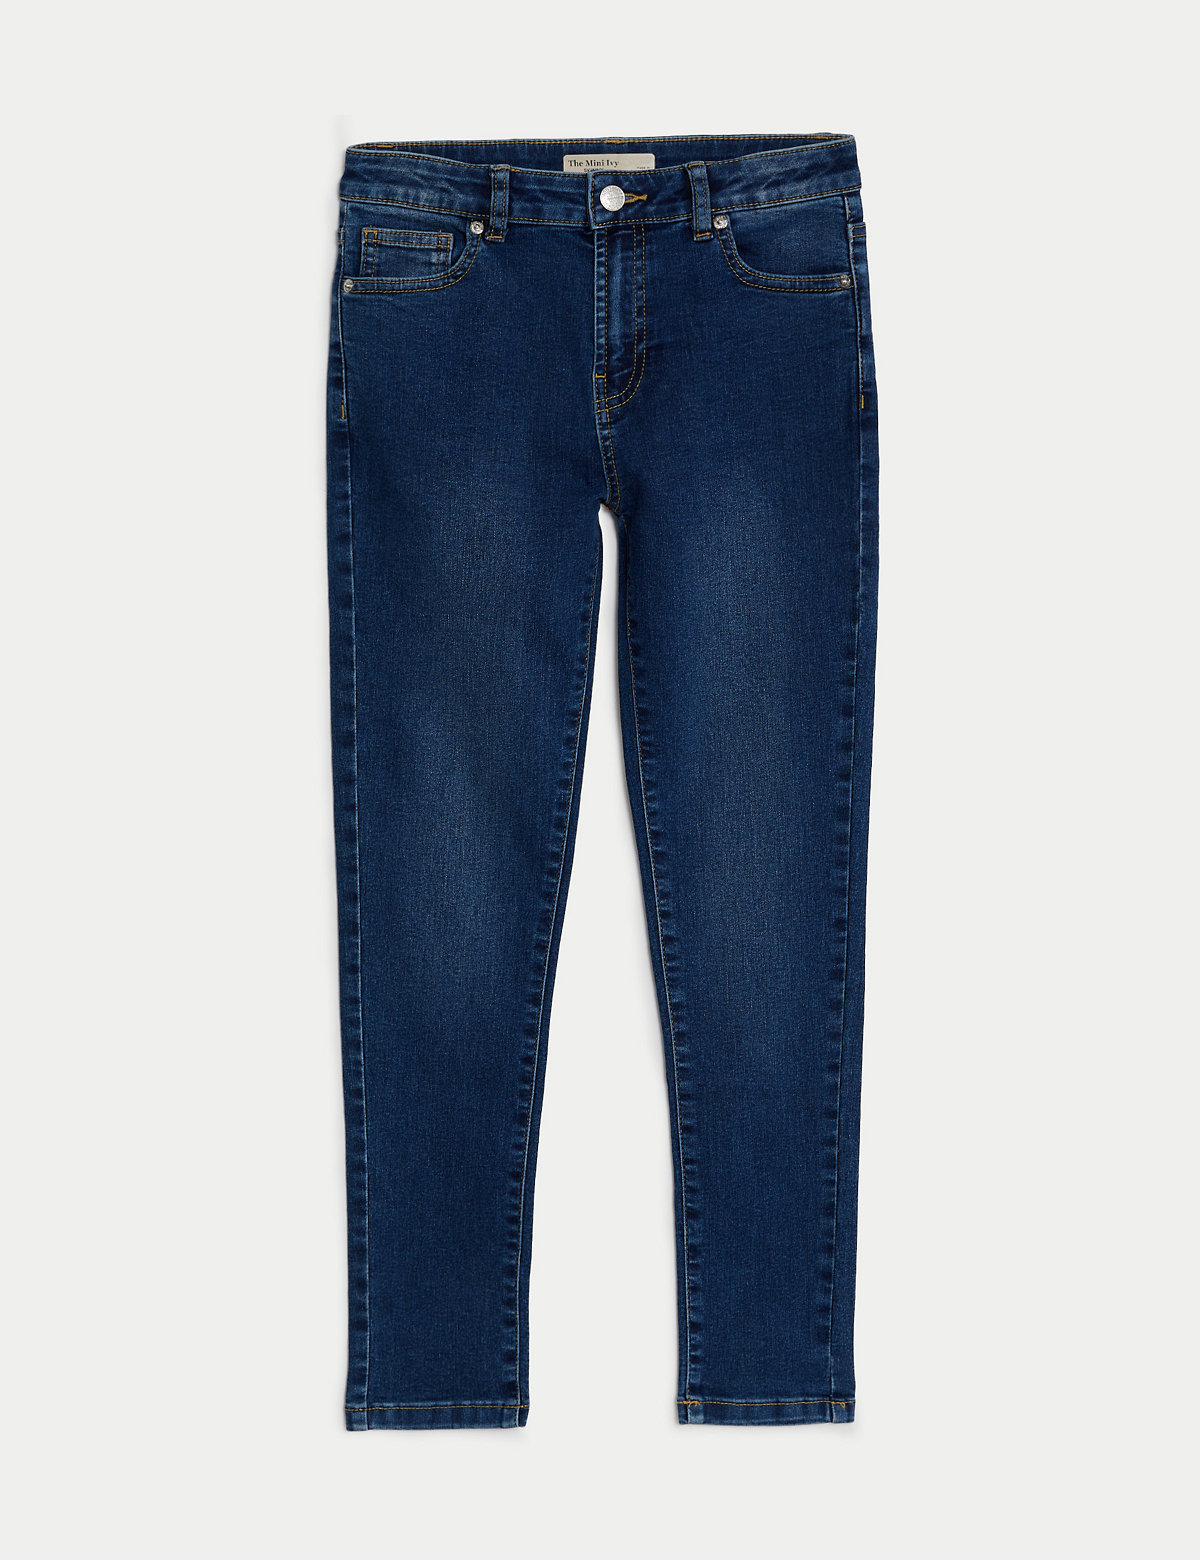 Skinny Denim Jeans (6-16 Yrs)